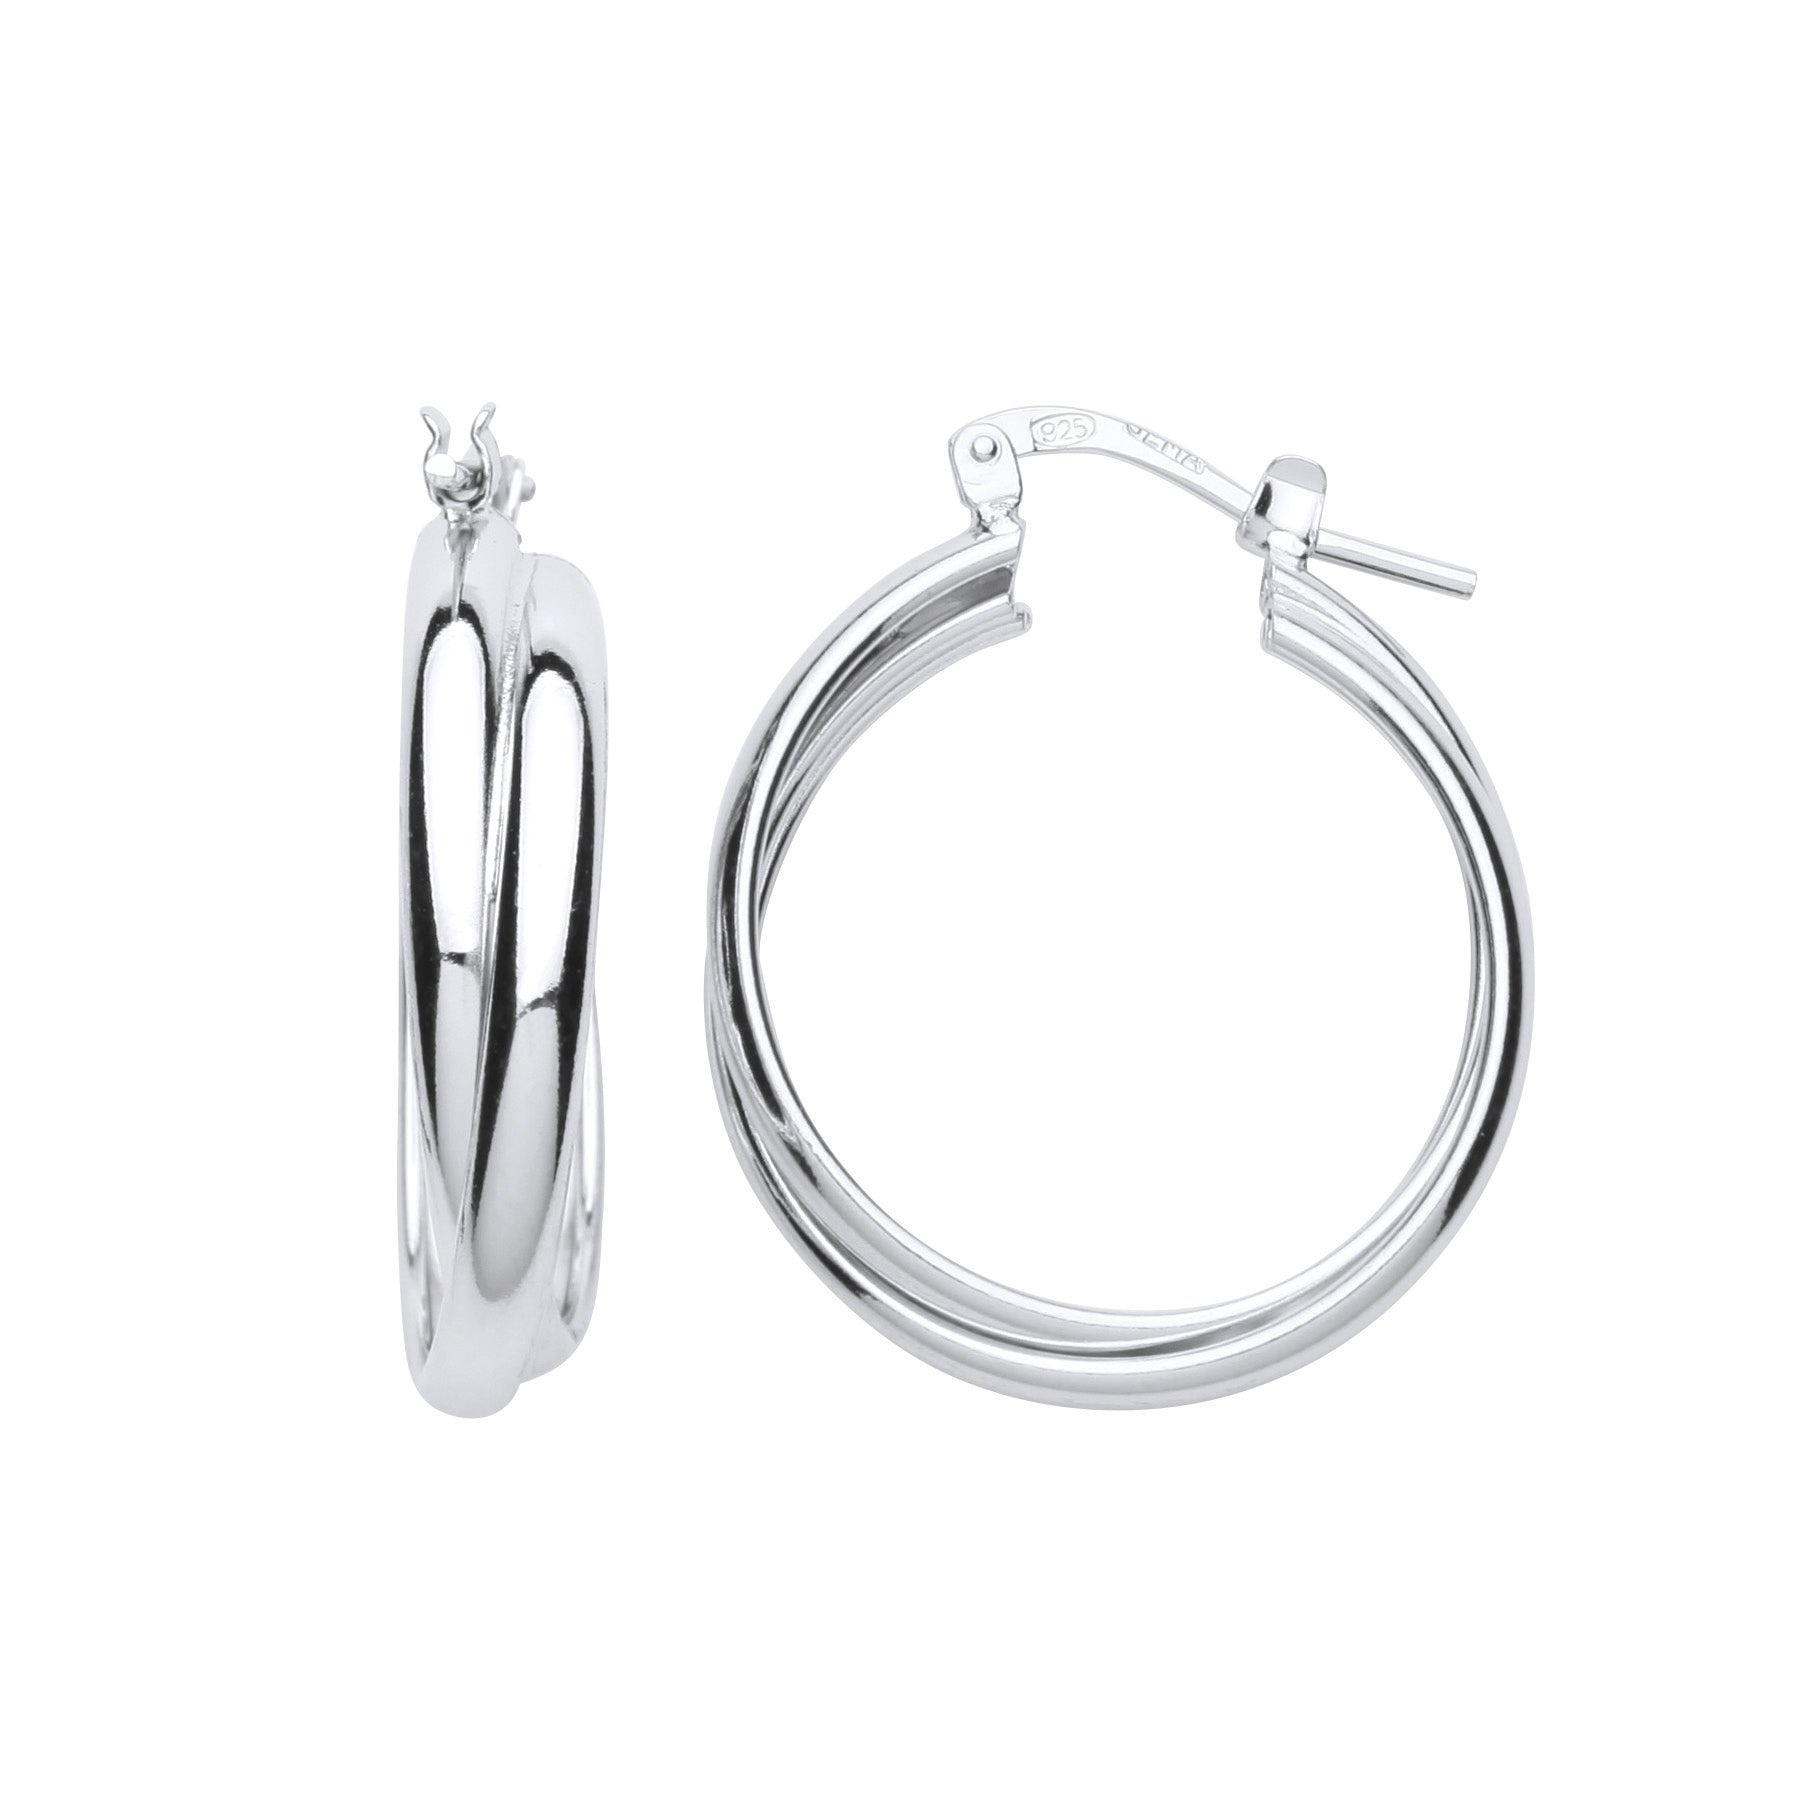 Silver  Polished Double Hoop Earrings 22mm - ER93